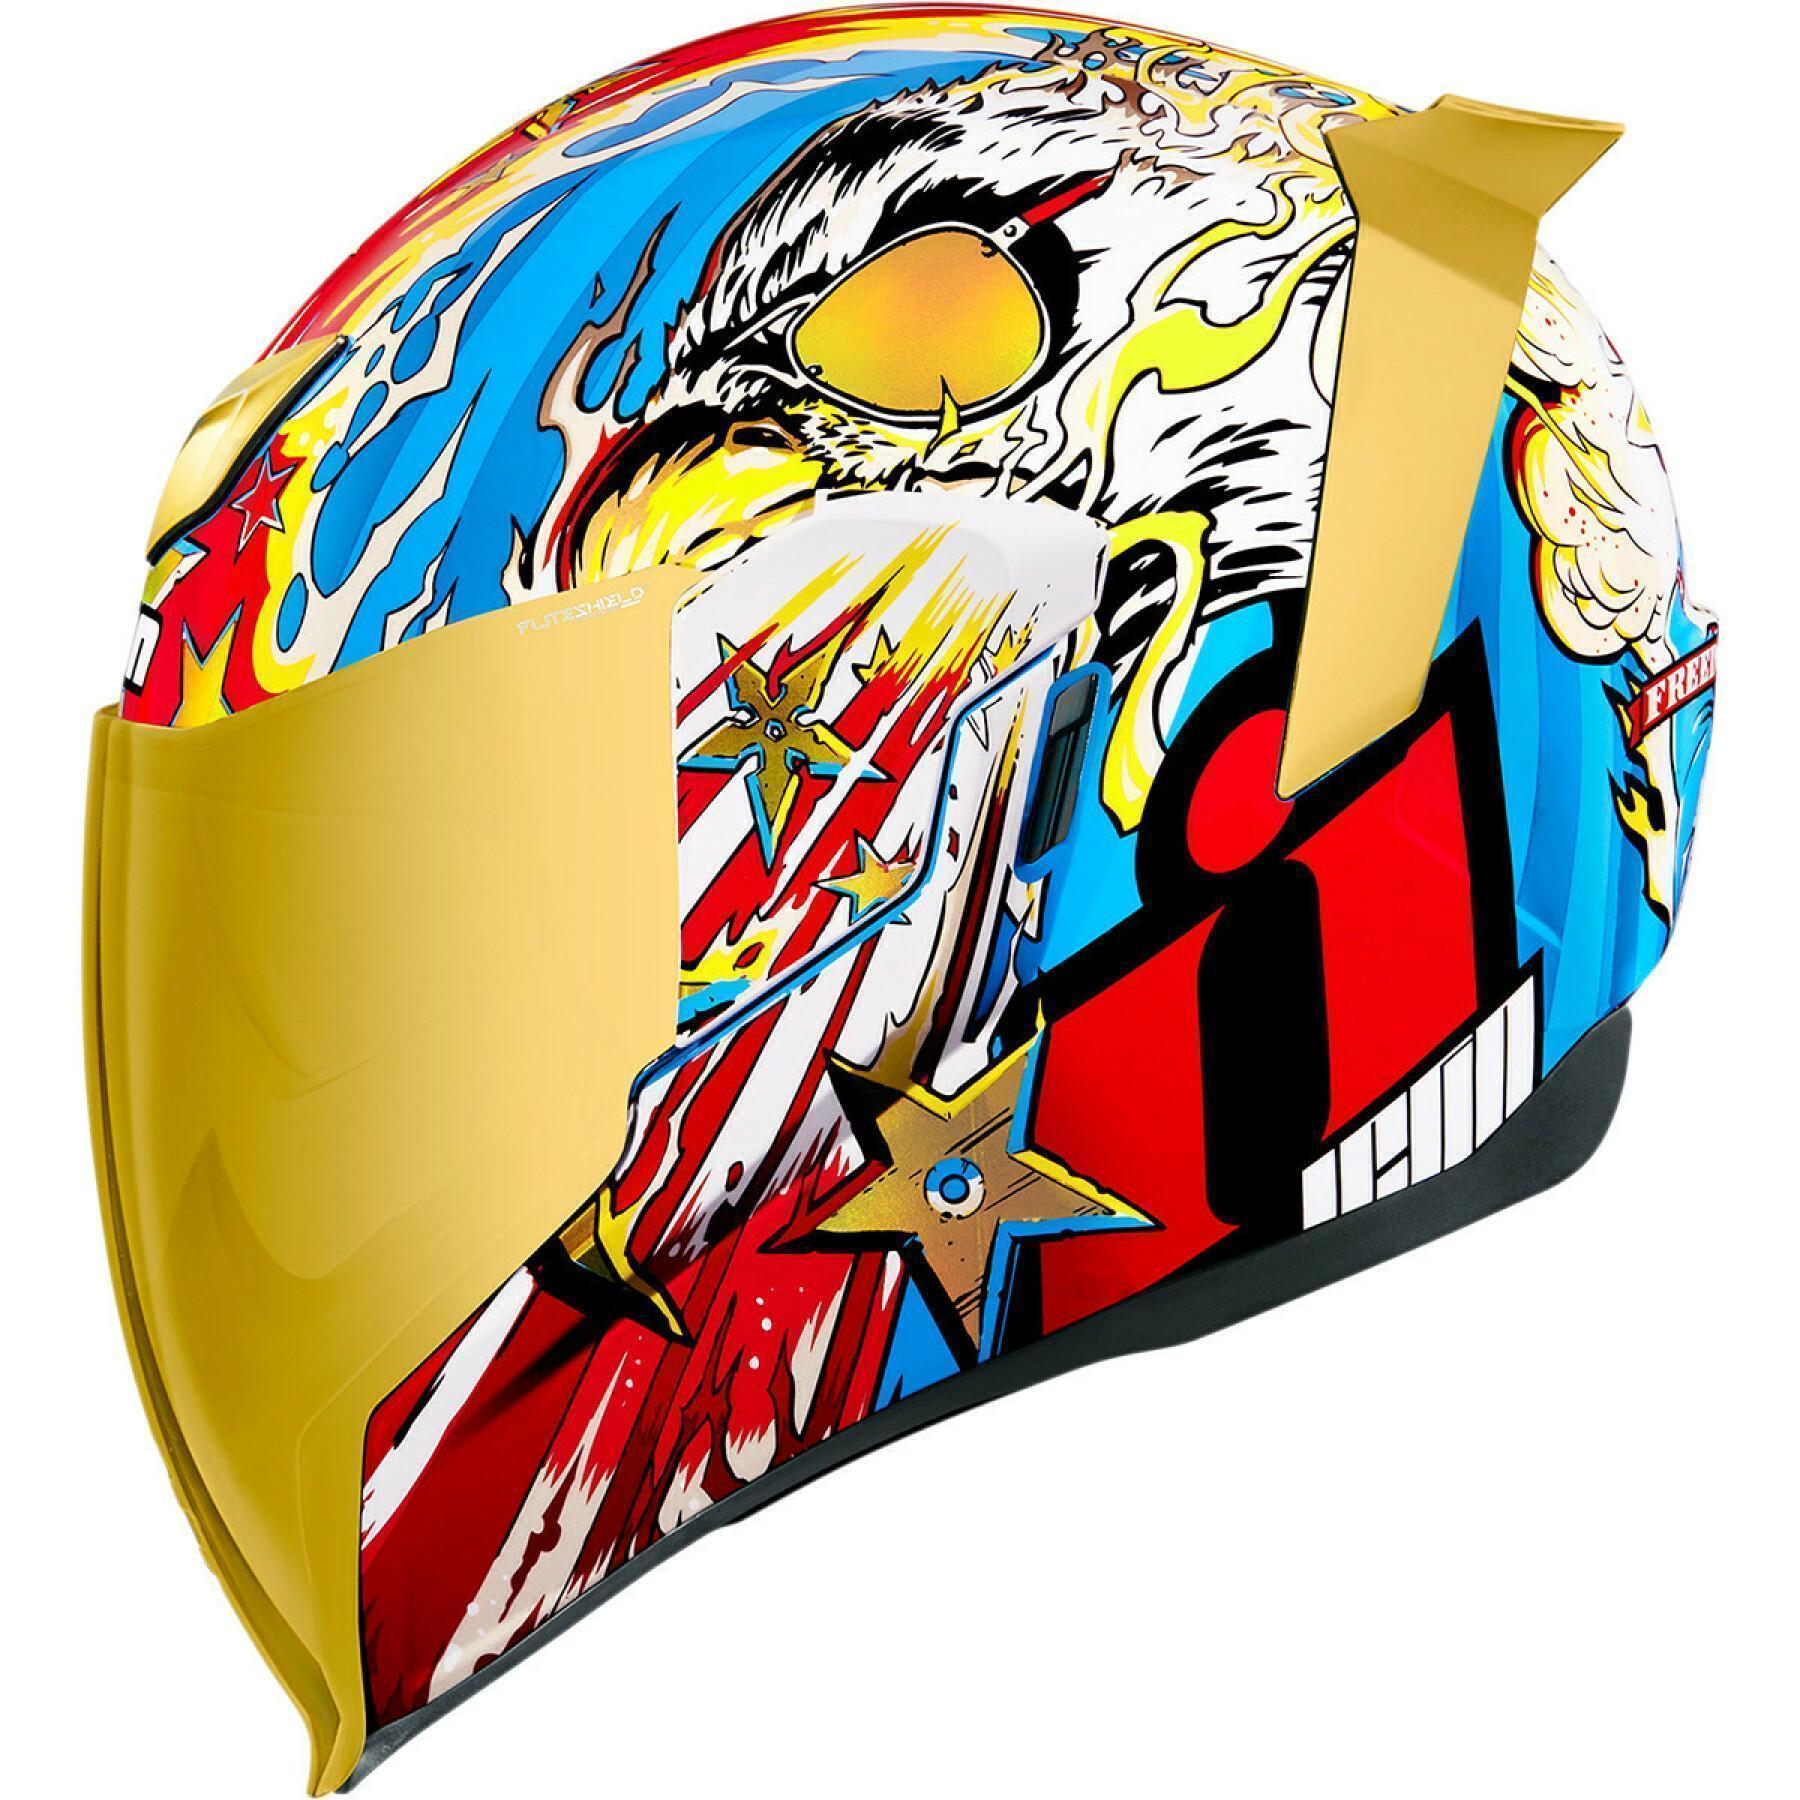 Full face motorcycle helmet Icon aflt freespitr gd